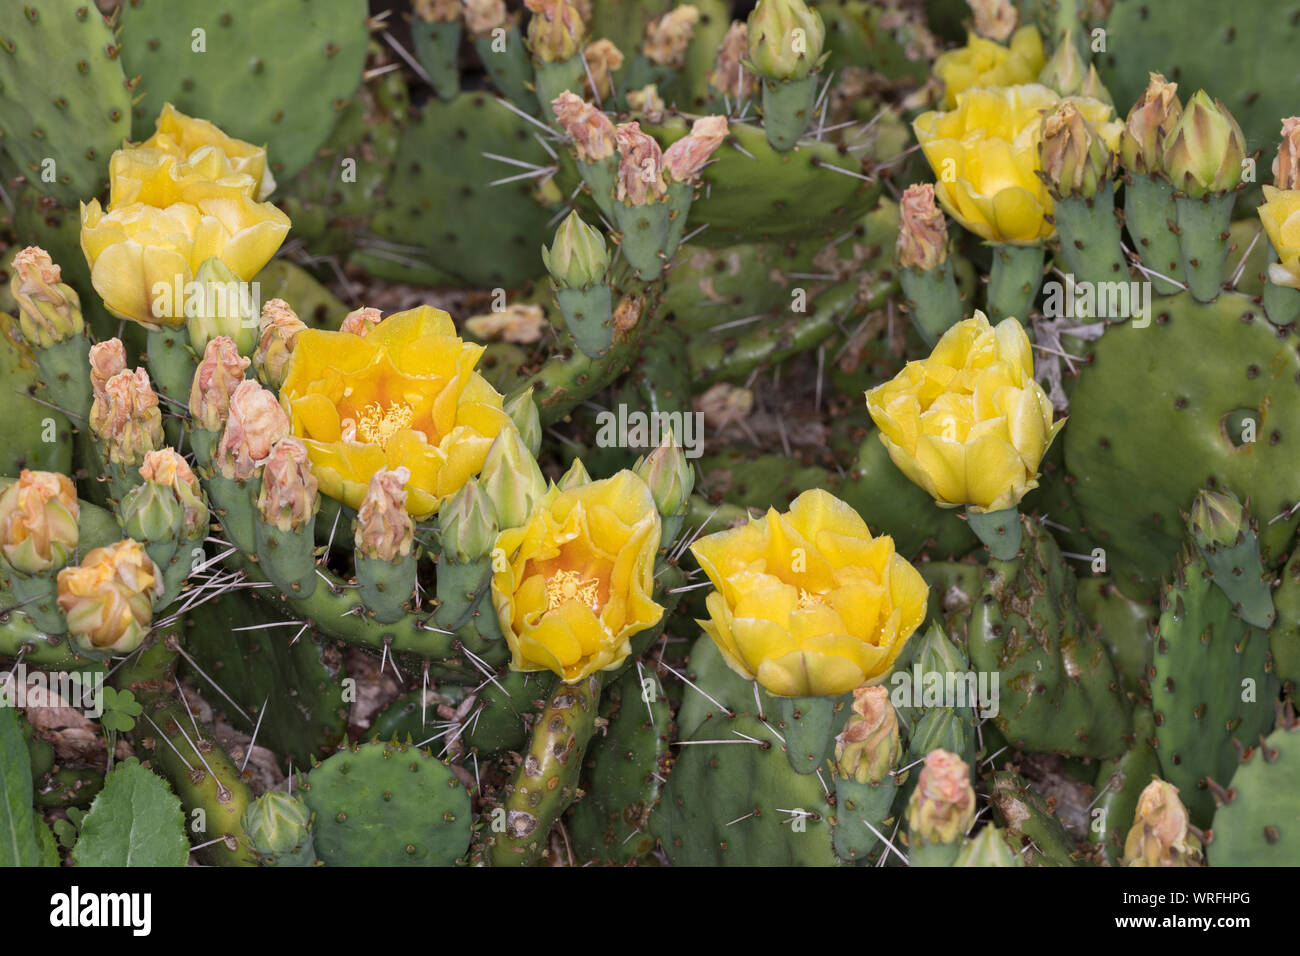 Schwarzbraundorniger Feigenkaktus, Feigenkaktus, Opuntie, Opuntia phaeacantha, prickly pear cactus, tulip prickly pear, desert prickly pear, Kaktus, K Stock Photo